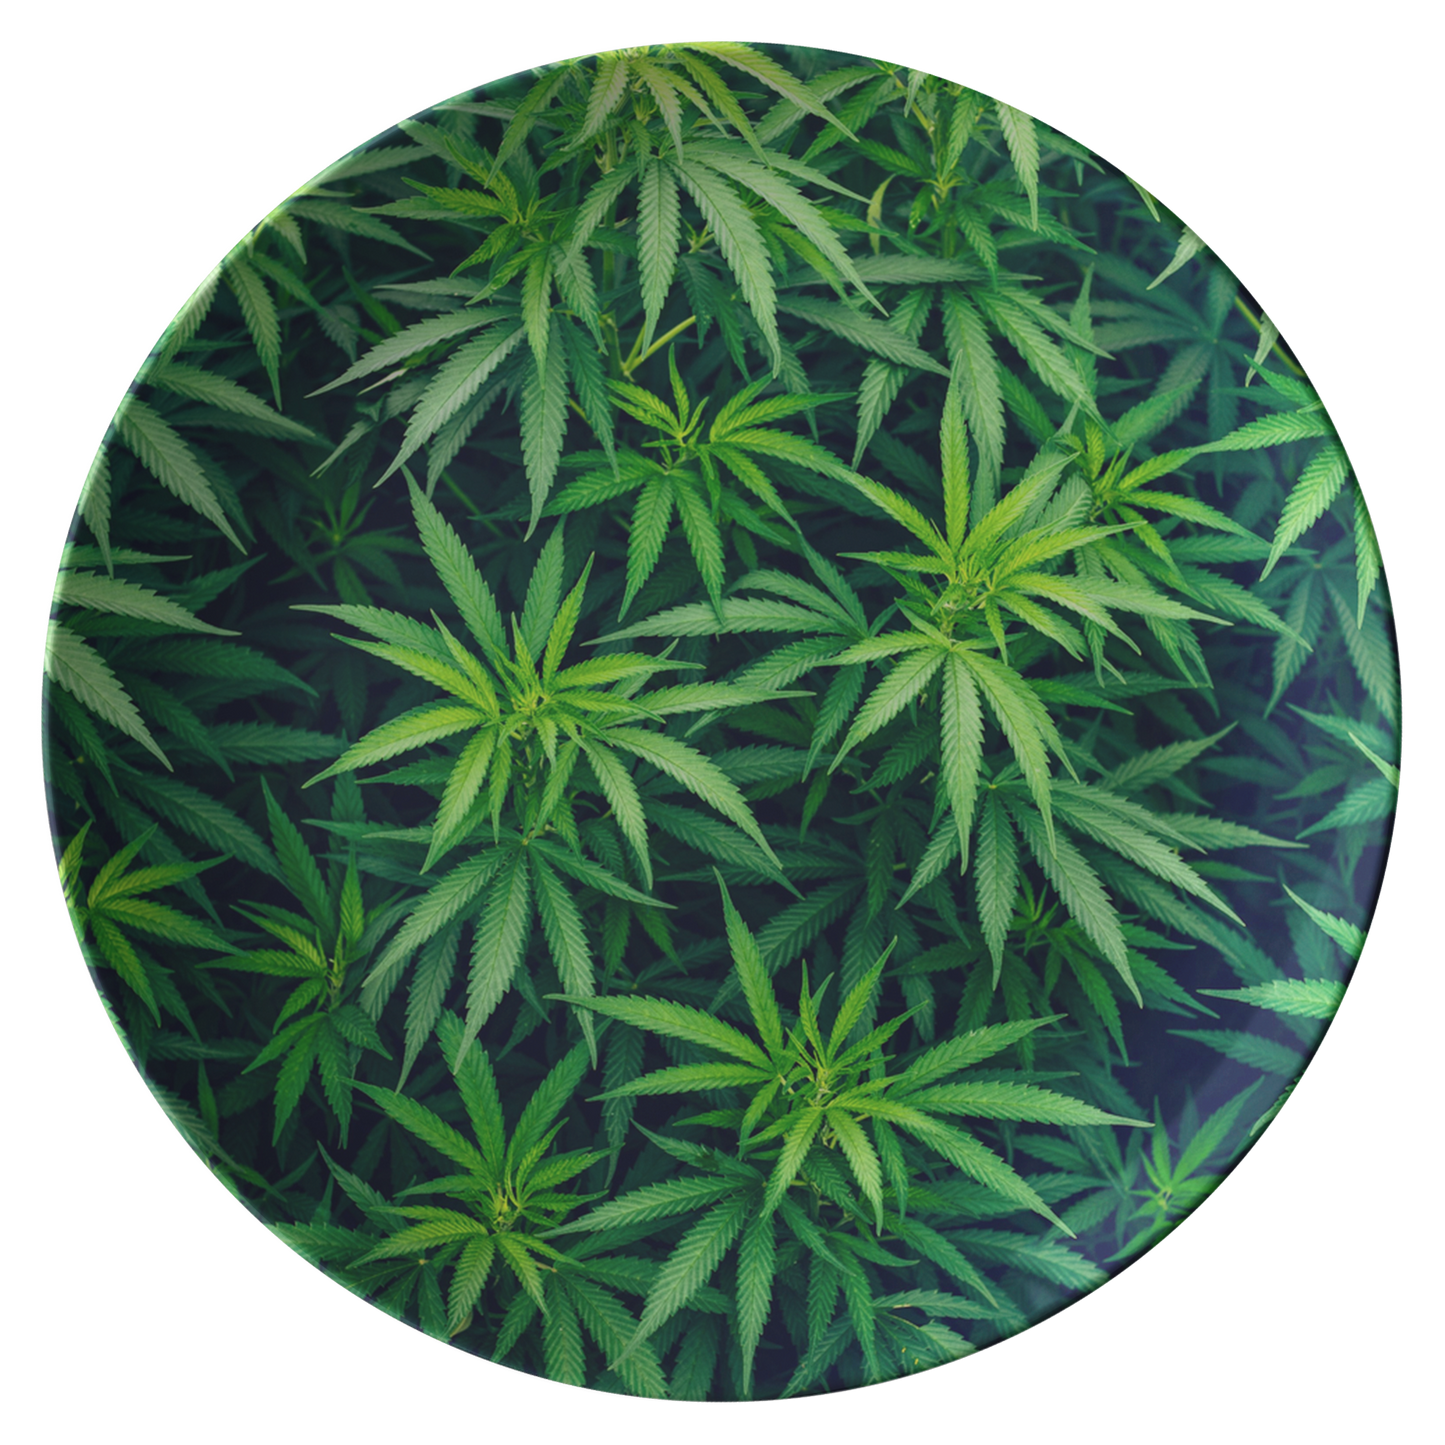 My Cannabis Plate